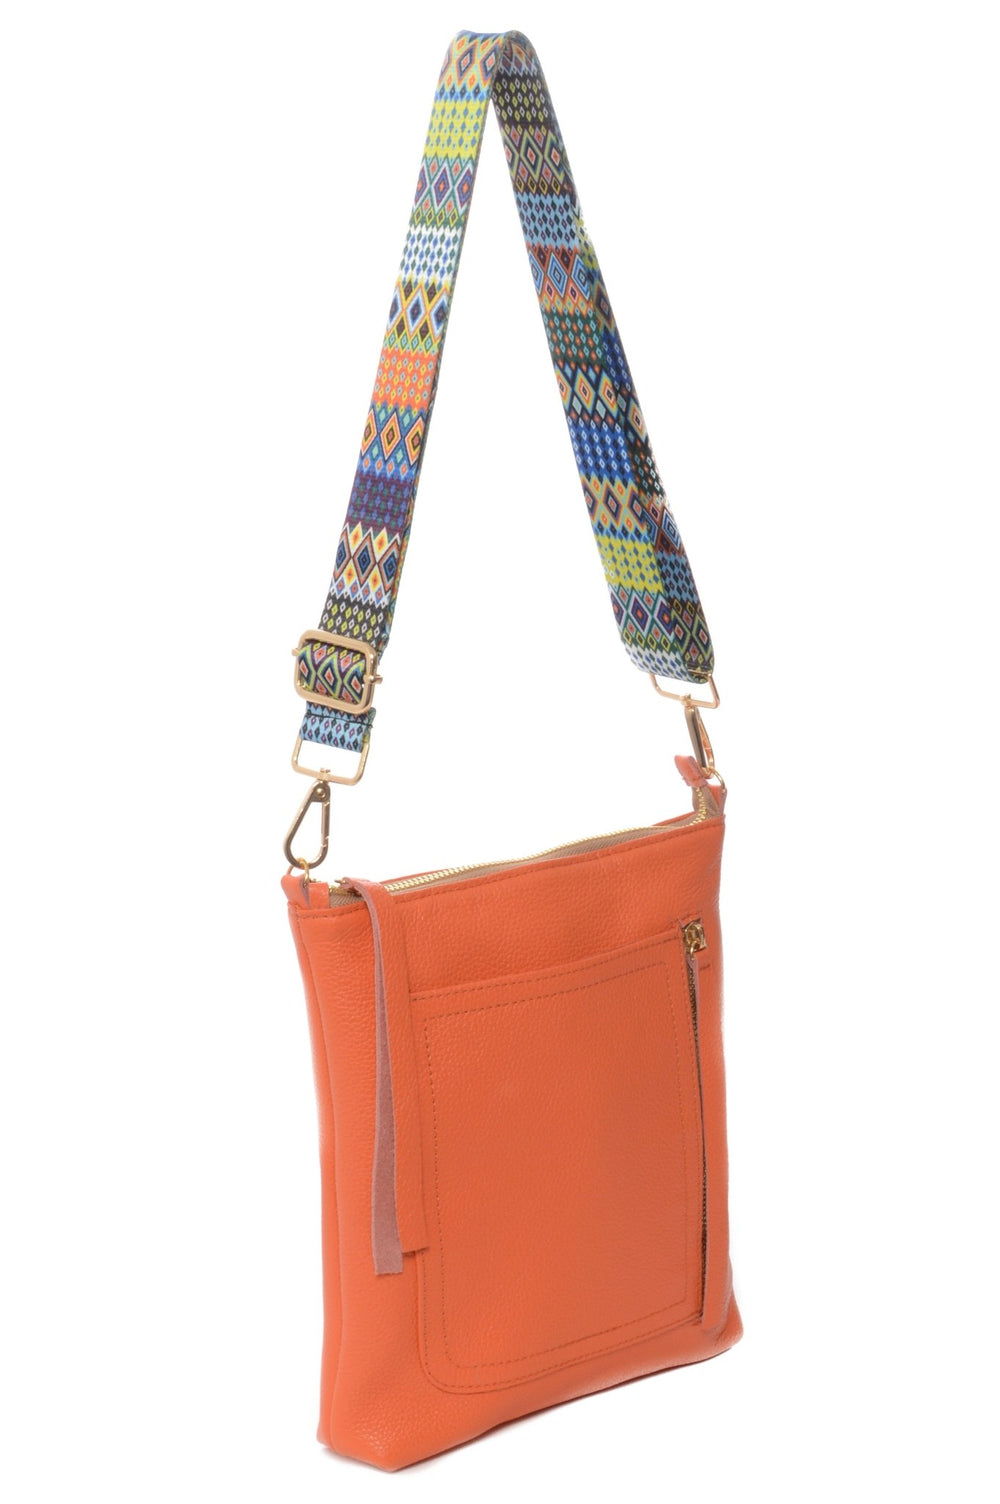 EMMA GS1 Orange - Carla Mancini Handbags